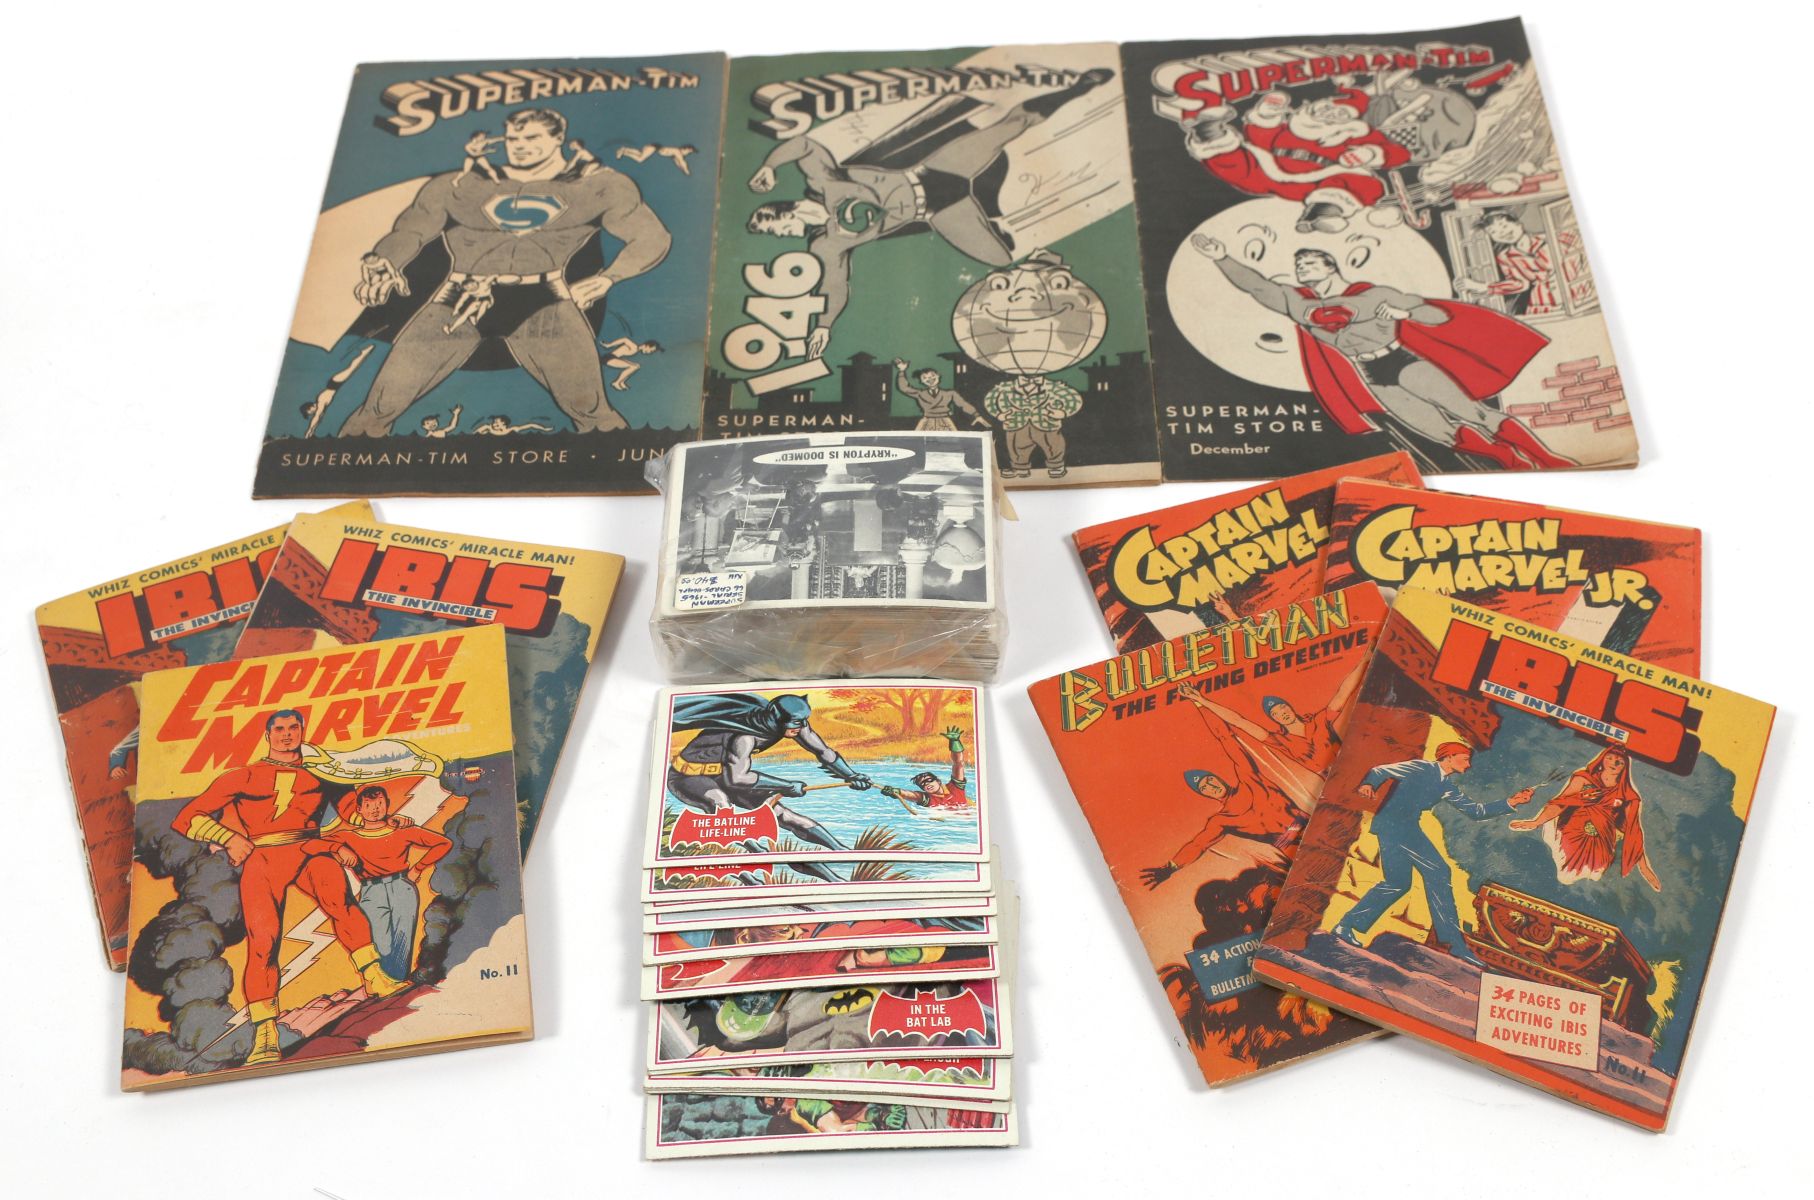 40s SUPER HERO MIGHTY MIDGET COMICS, TRADING CARDS